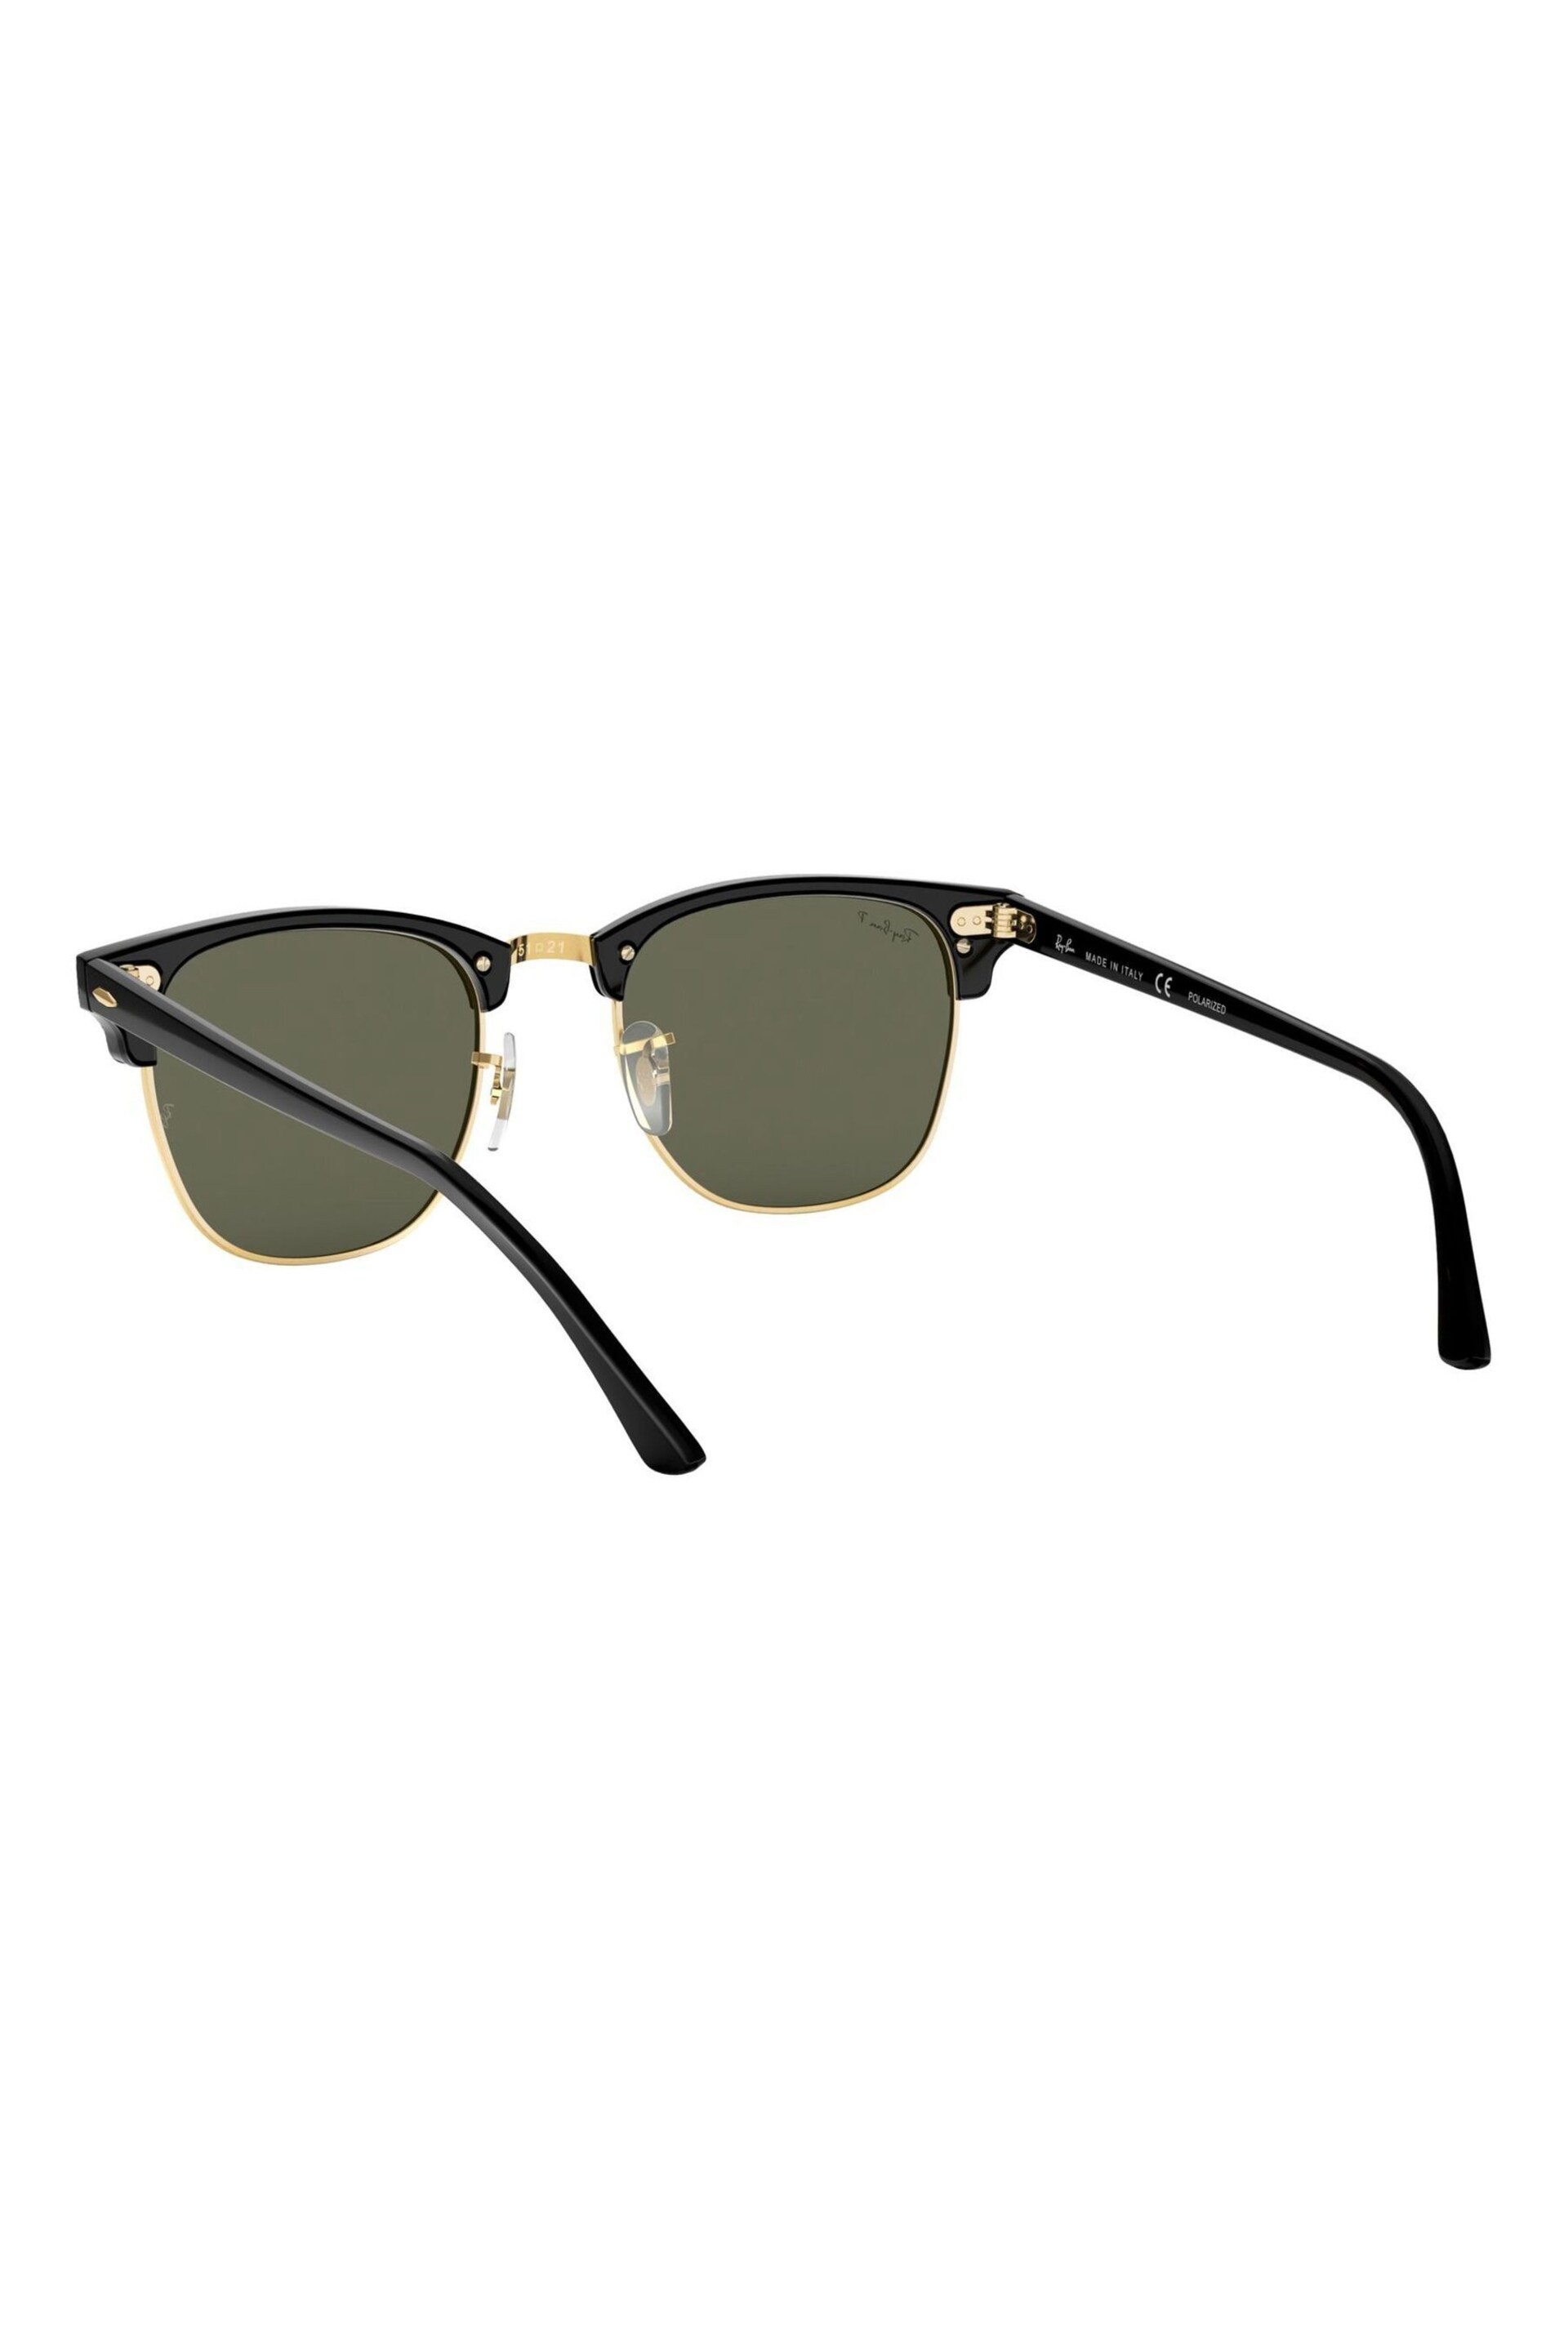 Ray-Ban Polarised Clubmaster Sunglasses - Image 5 of 12